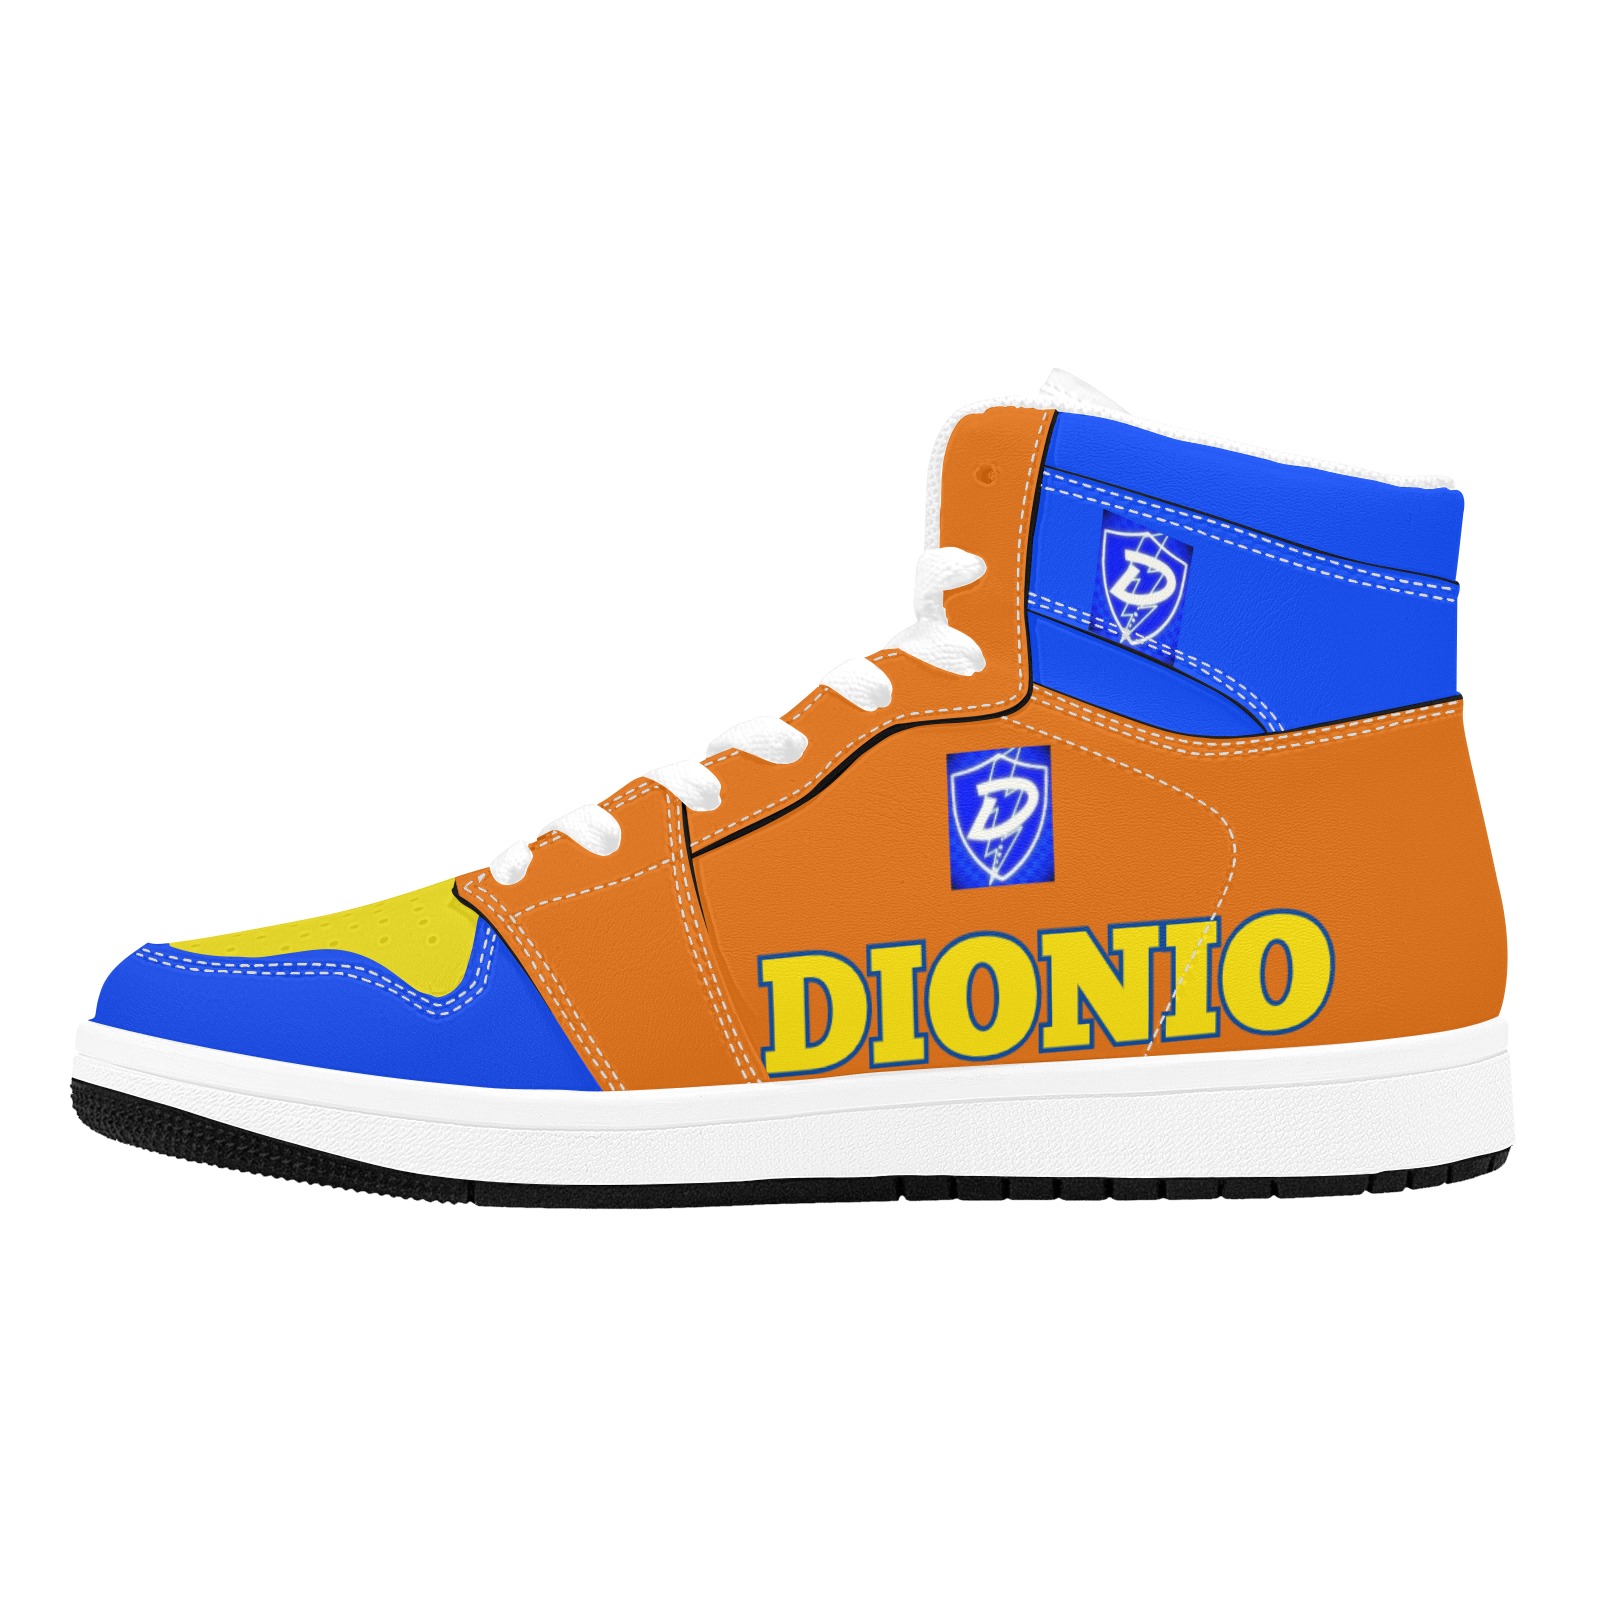 DIONIO - Agressive Basketball Sneaker Unisex High Top Sneakers (Model 20042)